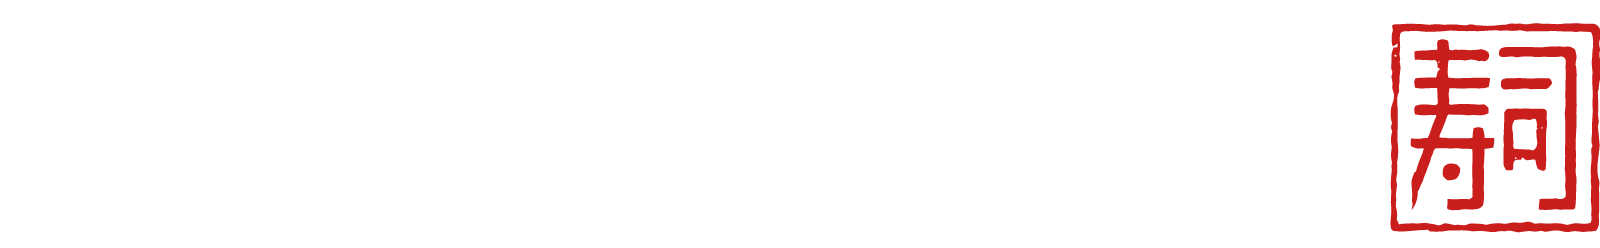 Kura Sushi USA logo large for dark backgrounds (transparent PNG)